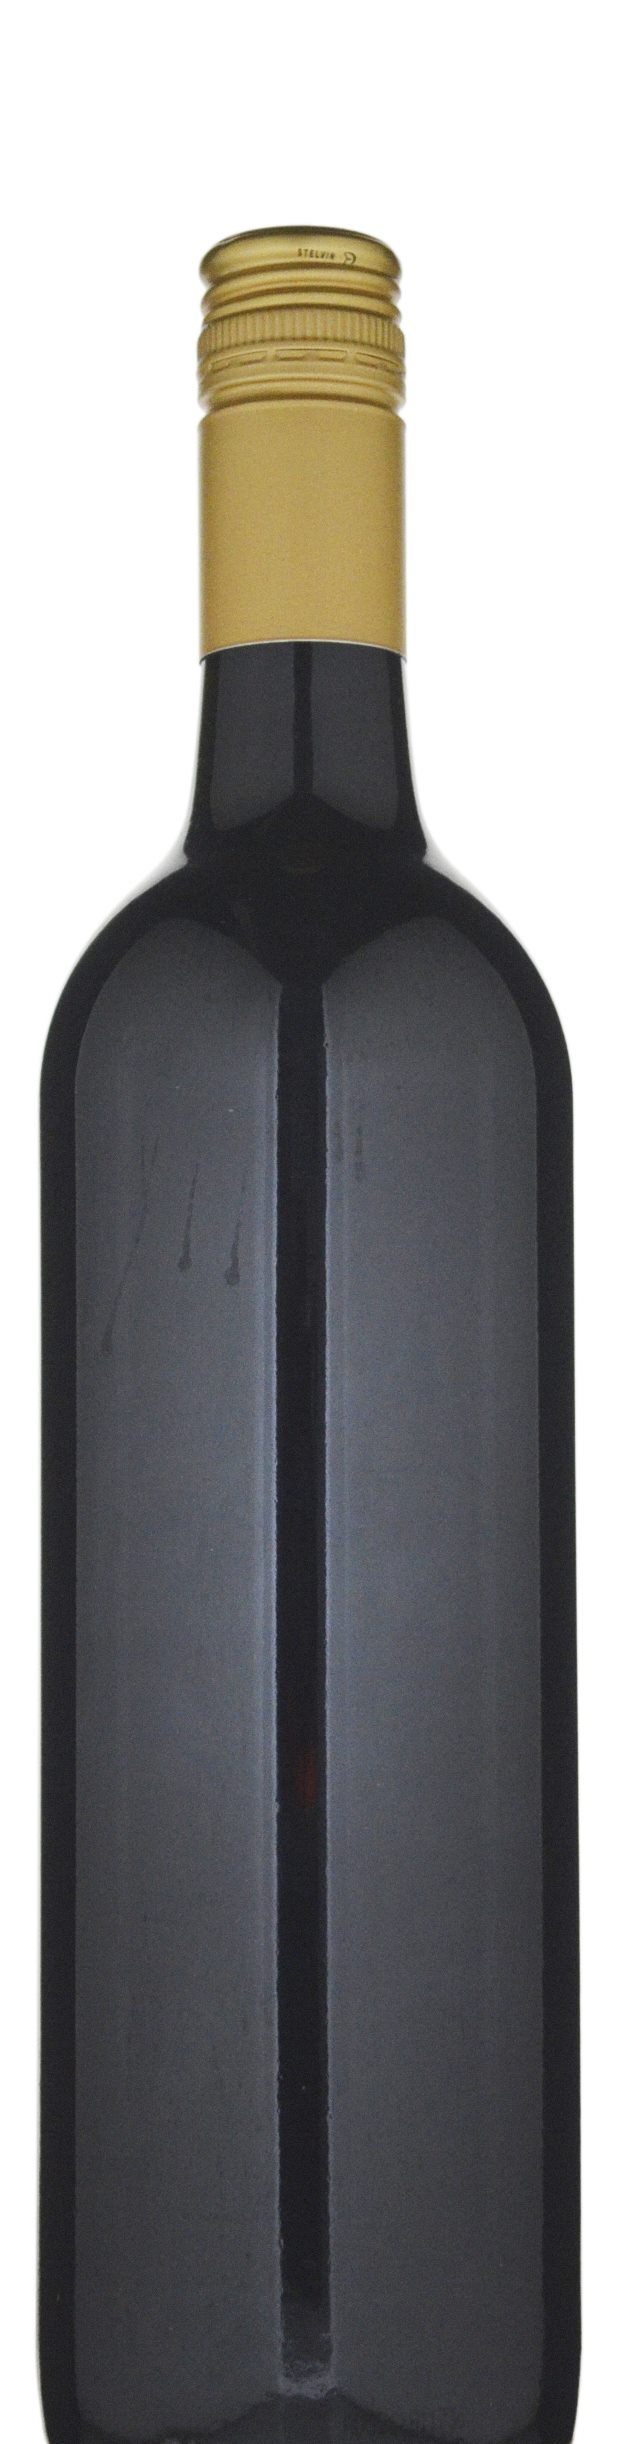 Lambert Vineyards (Cleanskin) Cabernet Merlot 2004